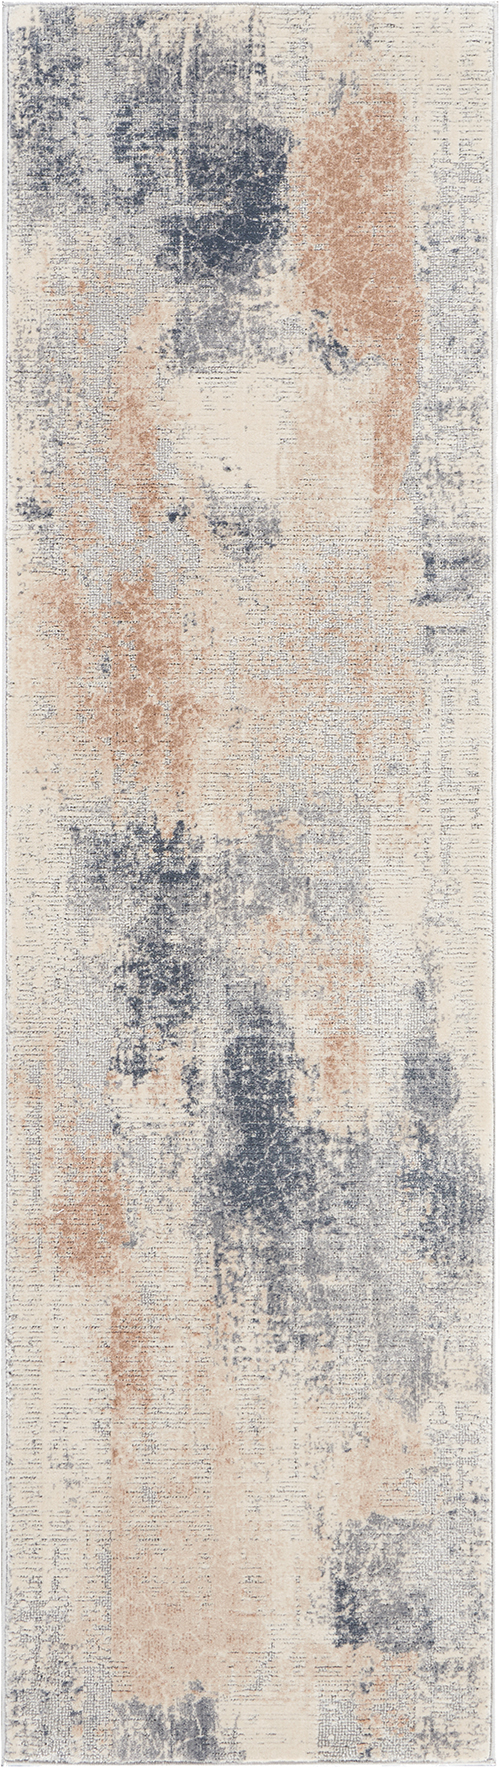 Nourison Rugs - Rustic Textures Runner RUS02 Rug in Beige / Grey - 2.3m x 0.66m